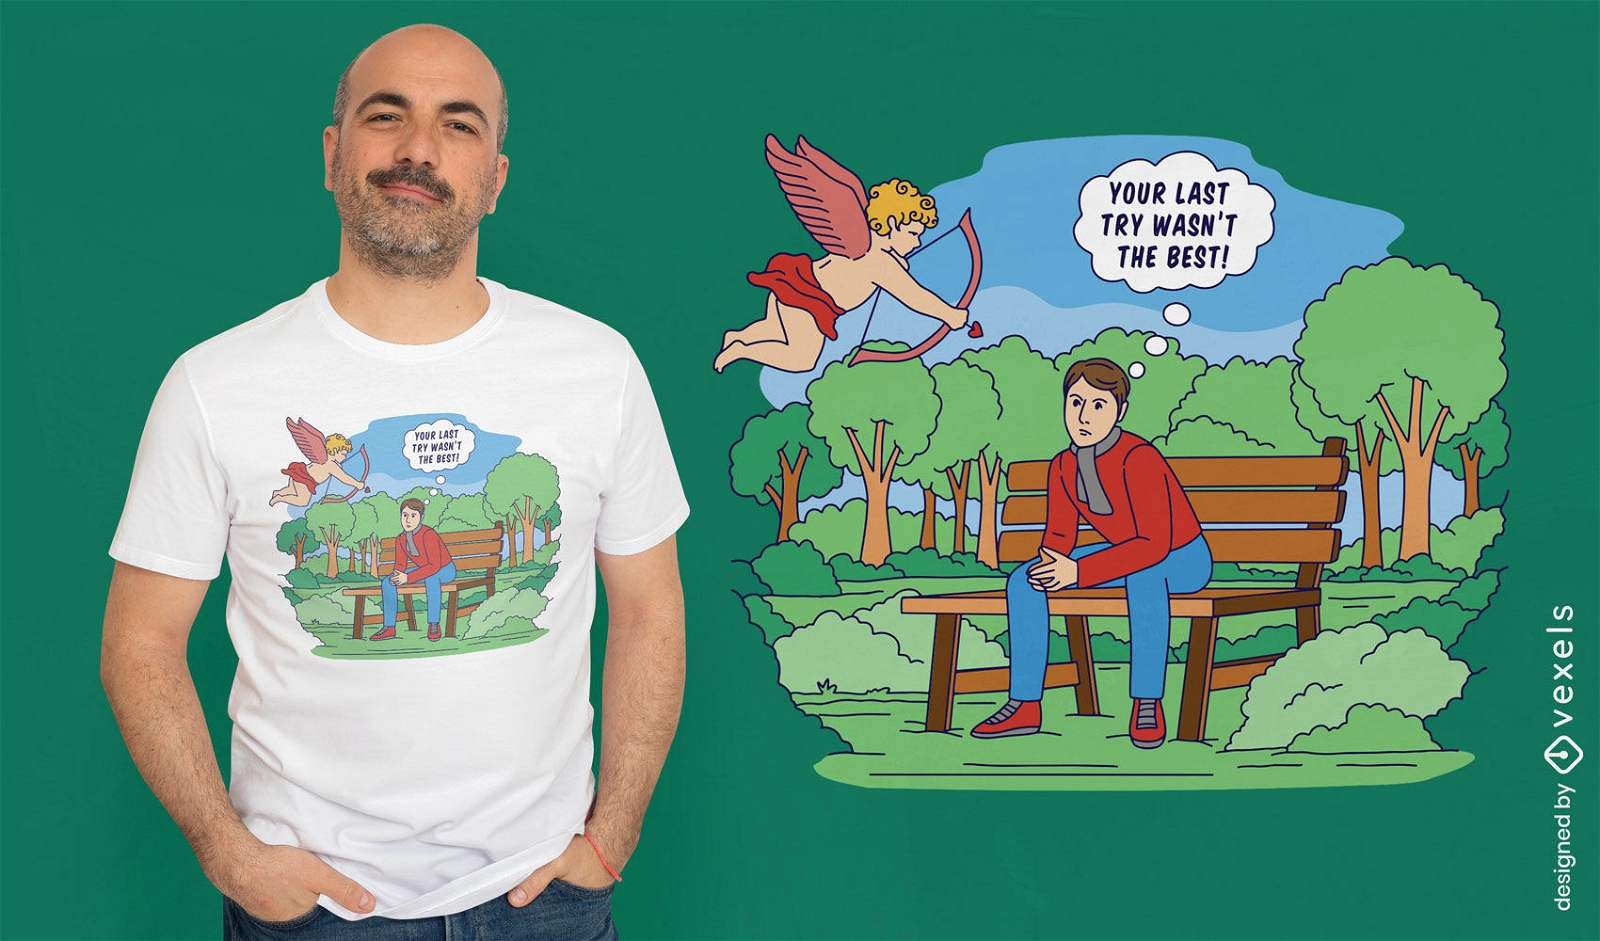 Funny Cupid love comic t-shirt design